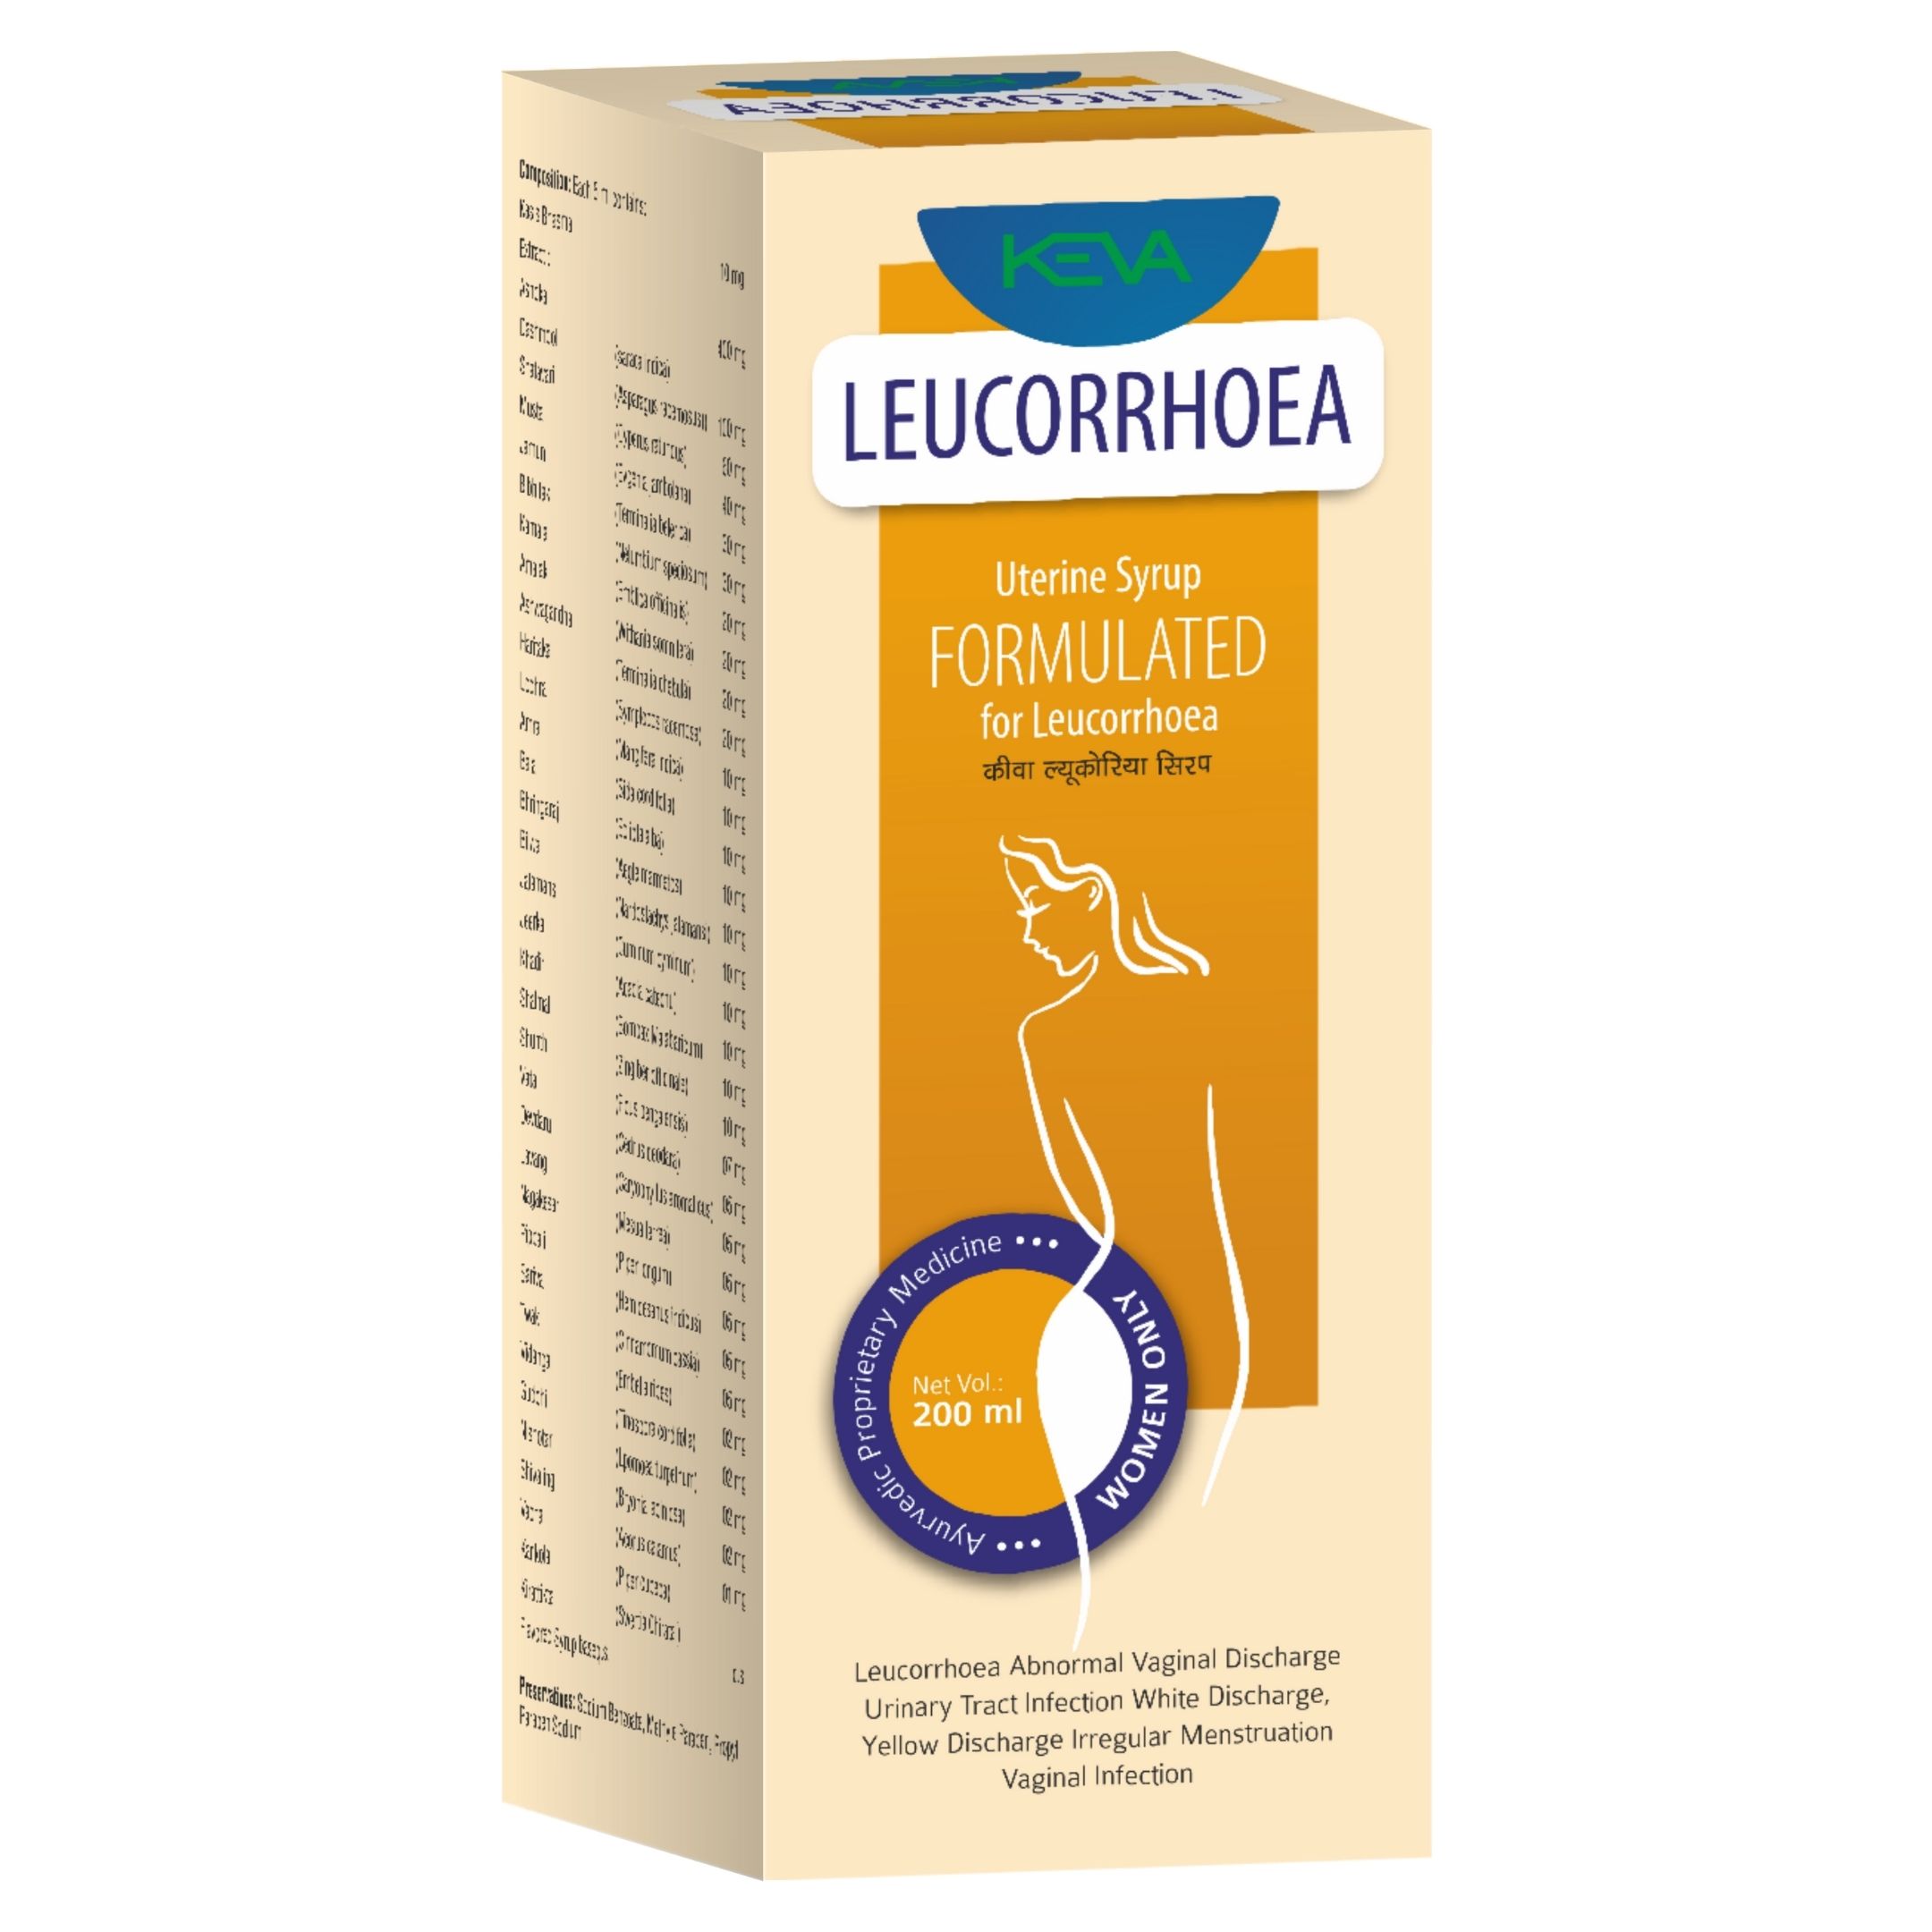 LEUCORRHOEA aid syrup